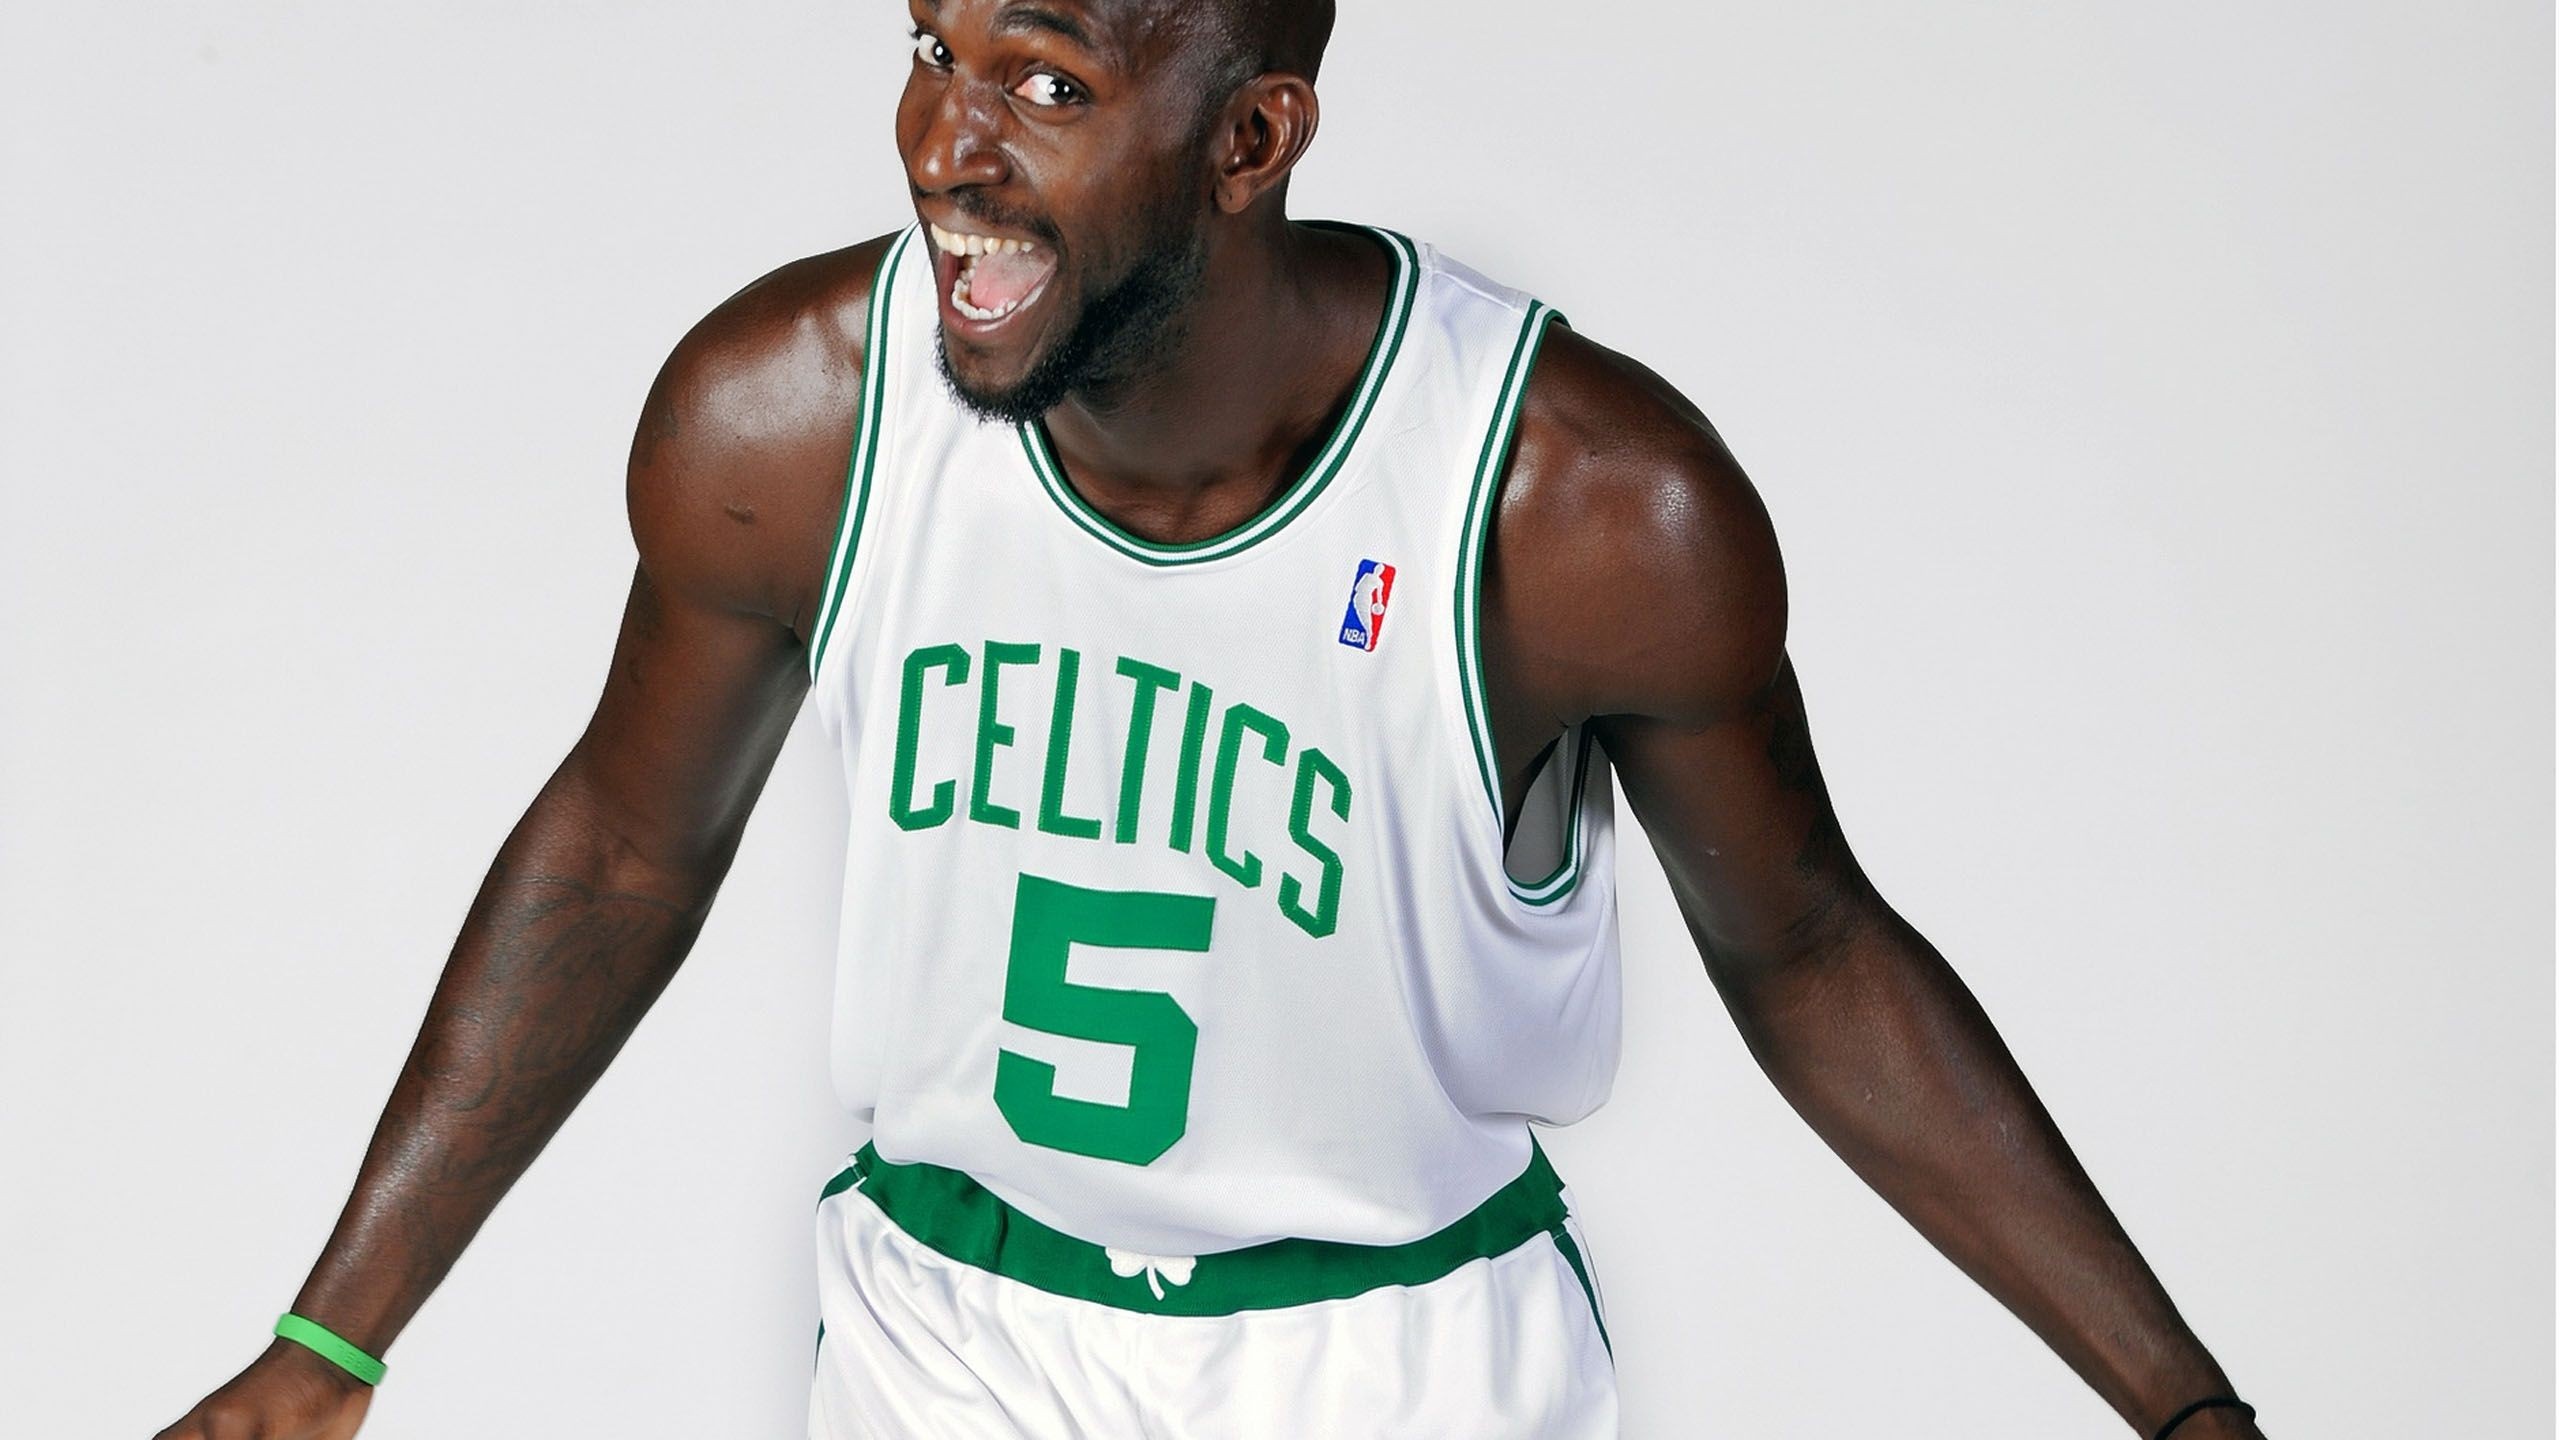 Boston Celtics Nba American Basketball Kevin Garnett Smiles